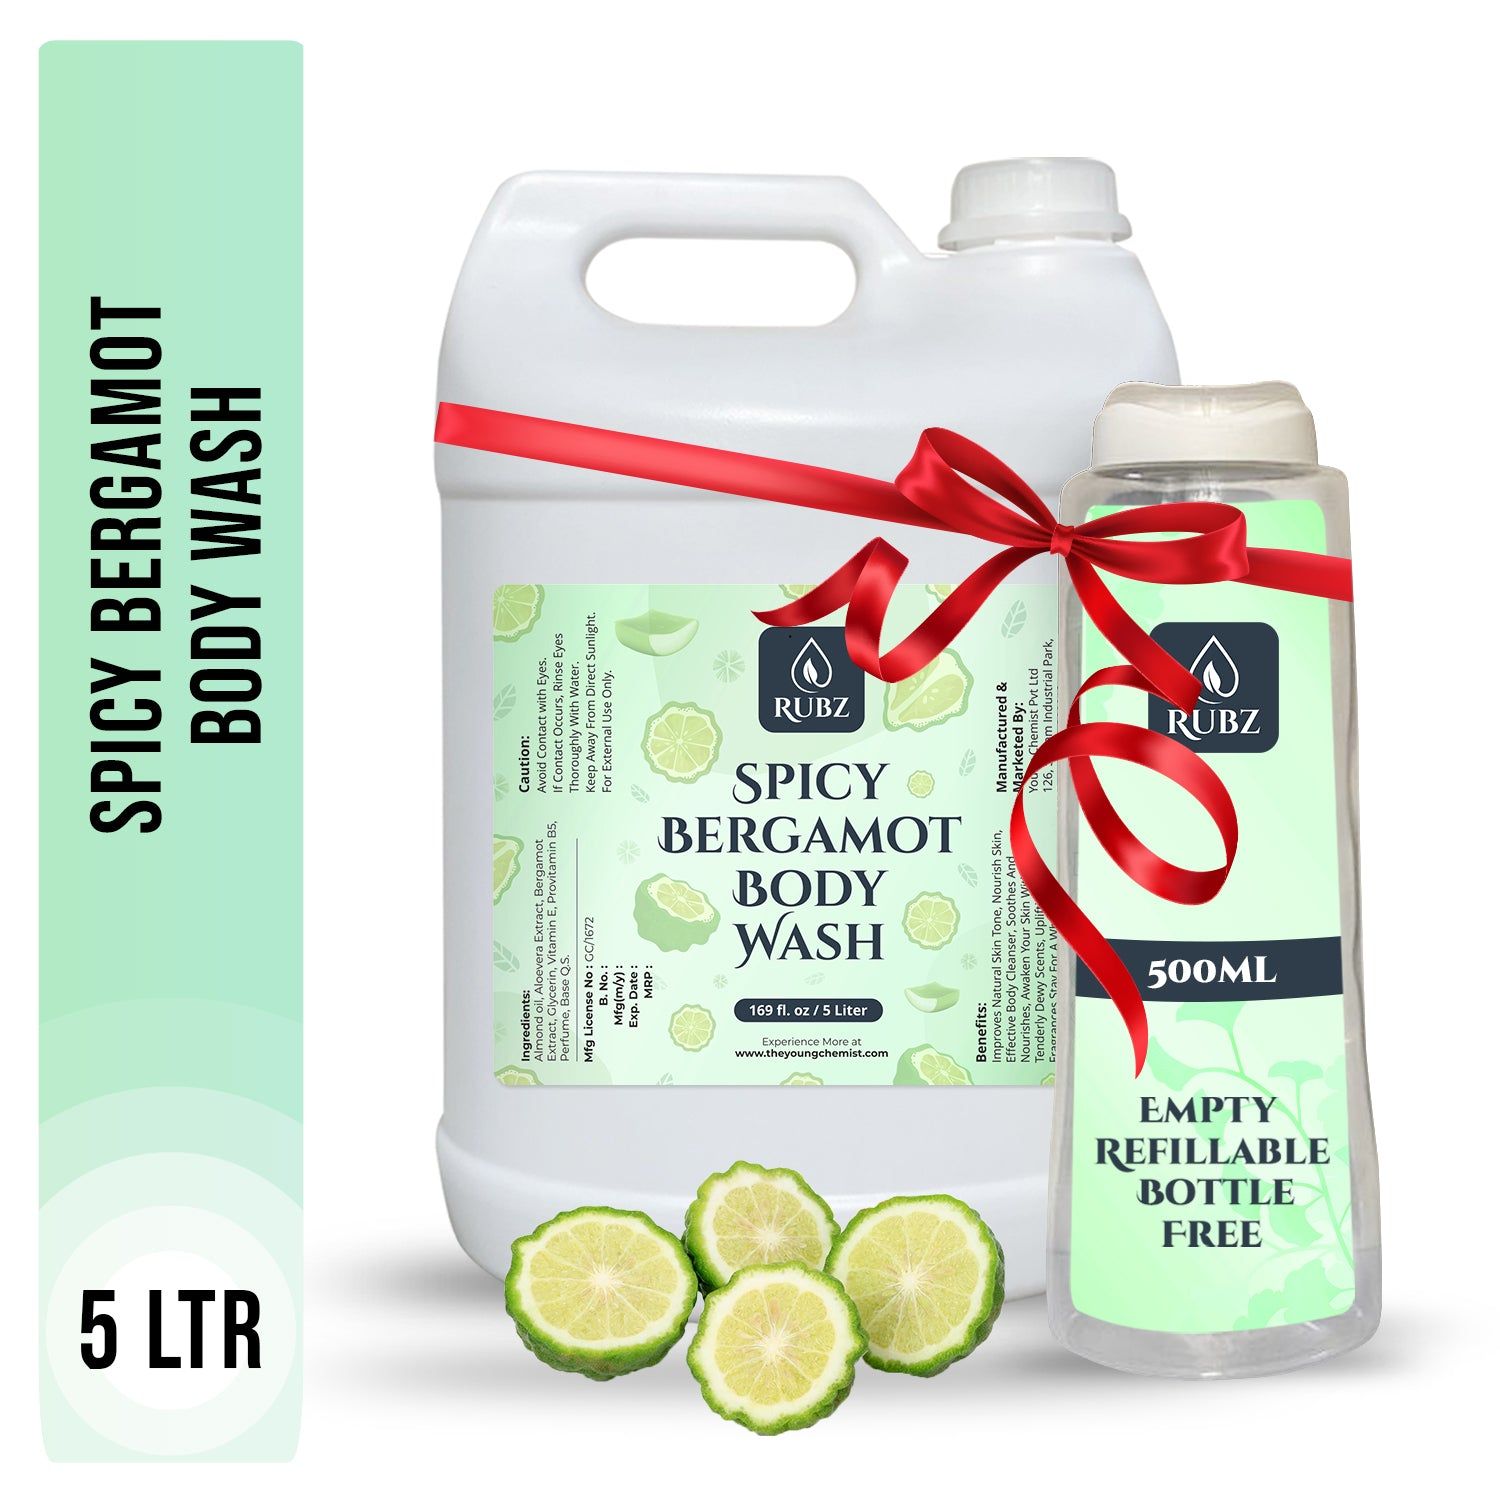 Rubz Spicy Bergamot Body Wash Refill Pack 5L | Liquid Soap | Shower Gel | with Refillable 500 ml Plastic Bottle | Best for Hotel, Spa, Salon, Joint Family | SLS Free | Paraben Free